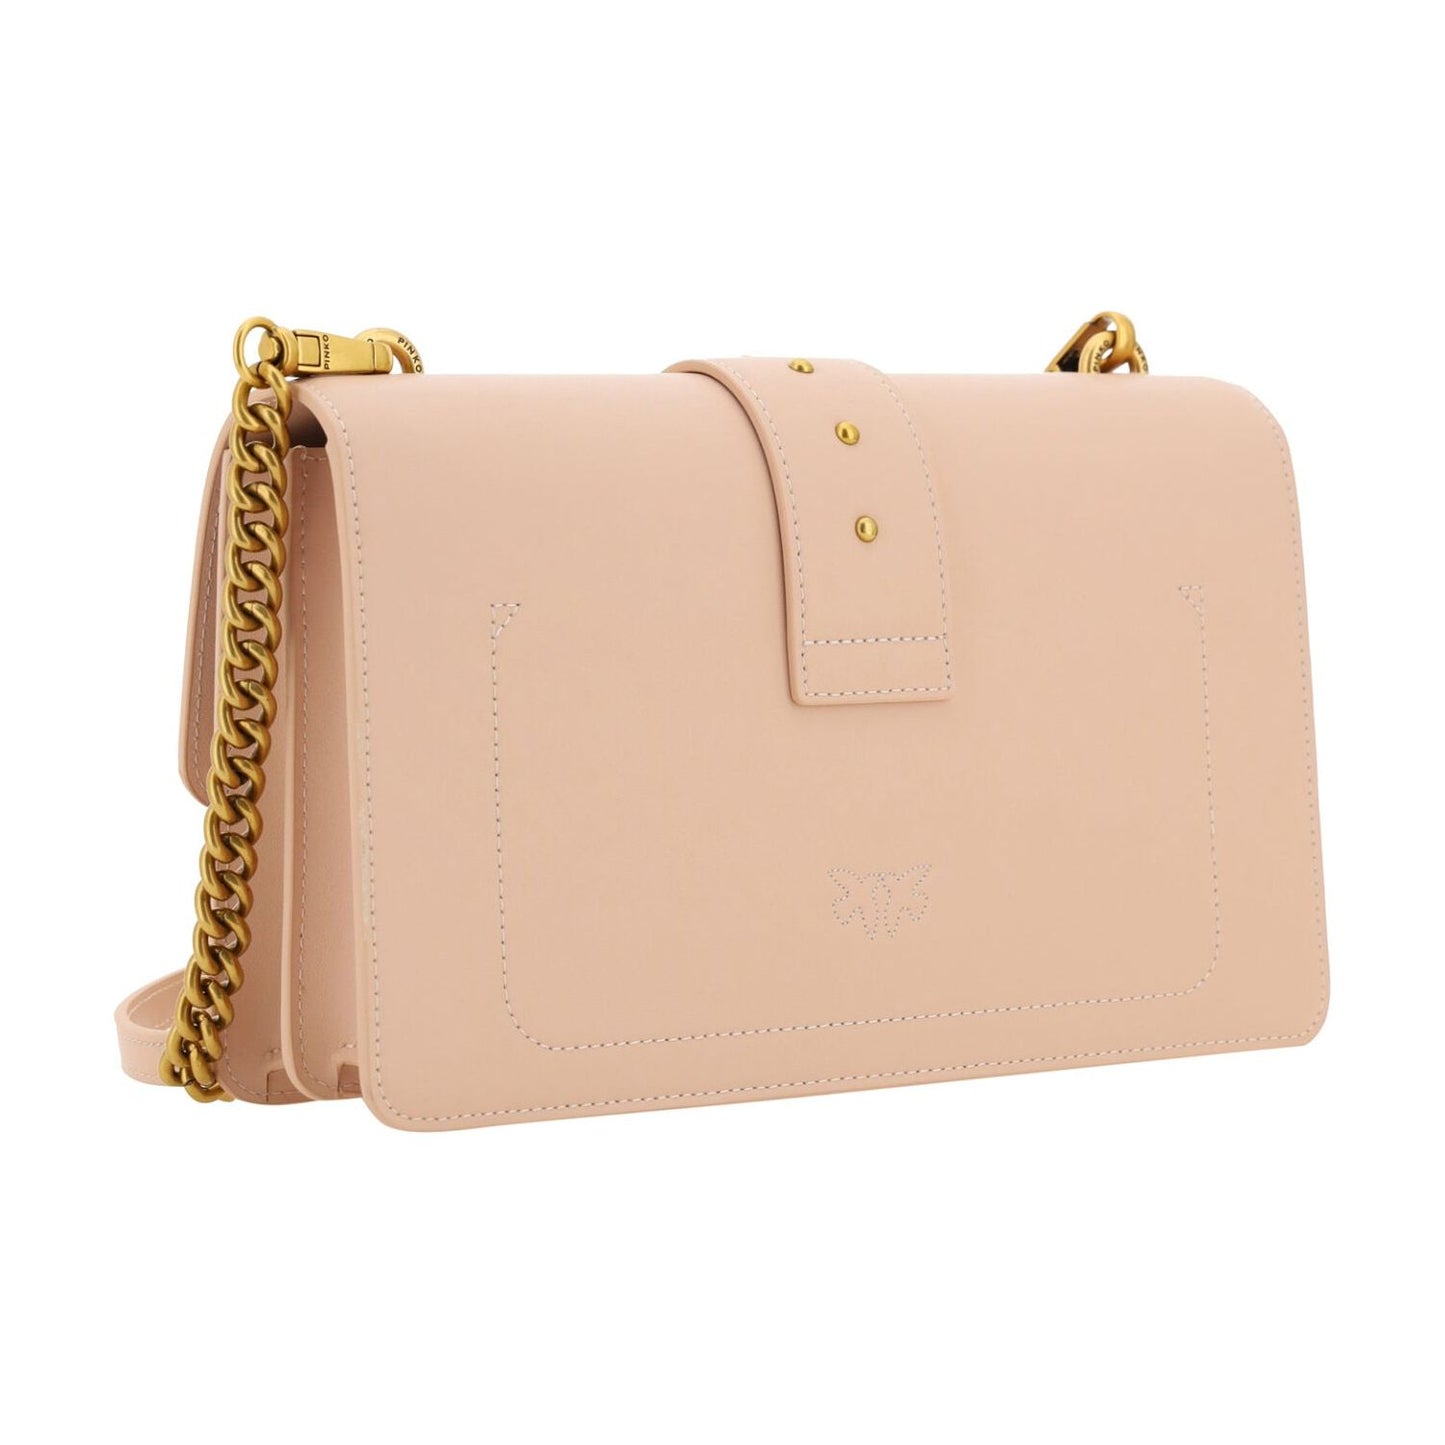 PINKO Chic Cipria Pink Classic Shoulder Bag pink-calf-leather-love-one-classic-shoulder-bag